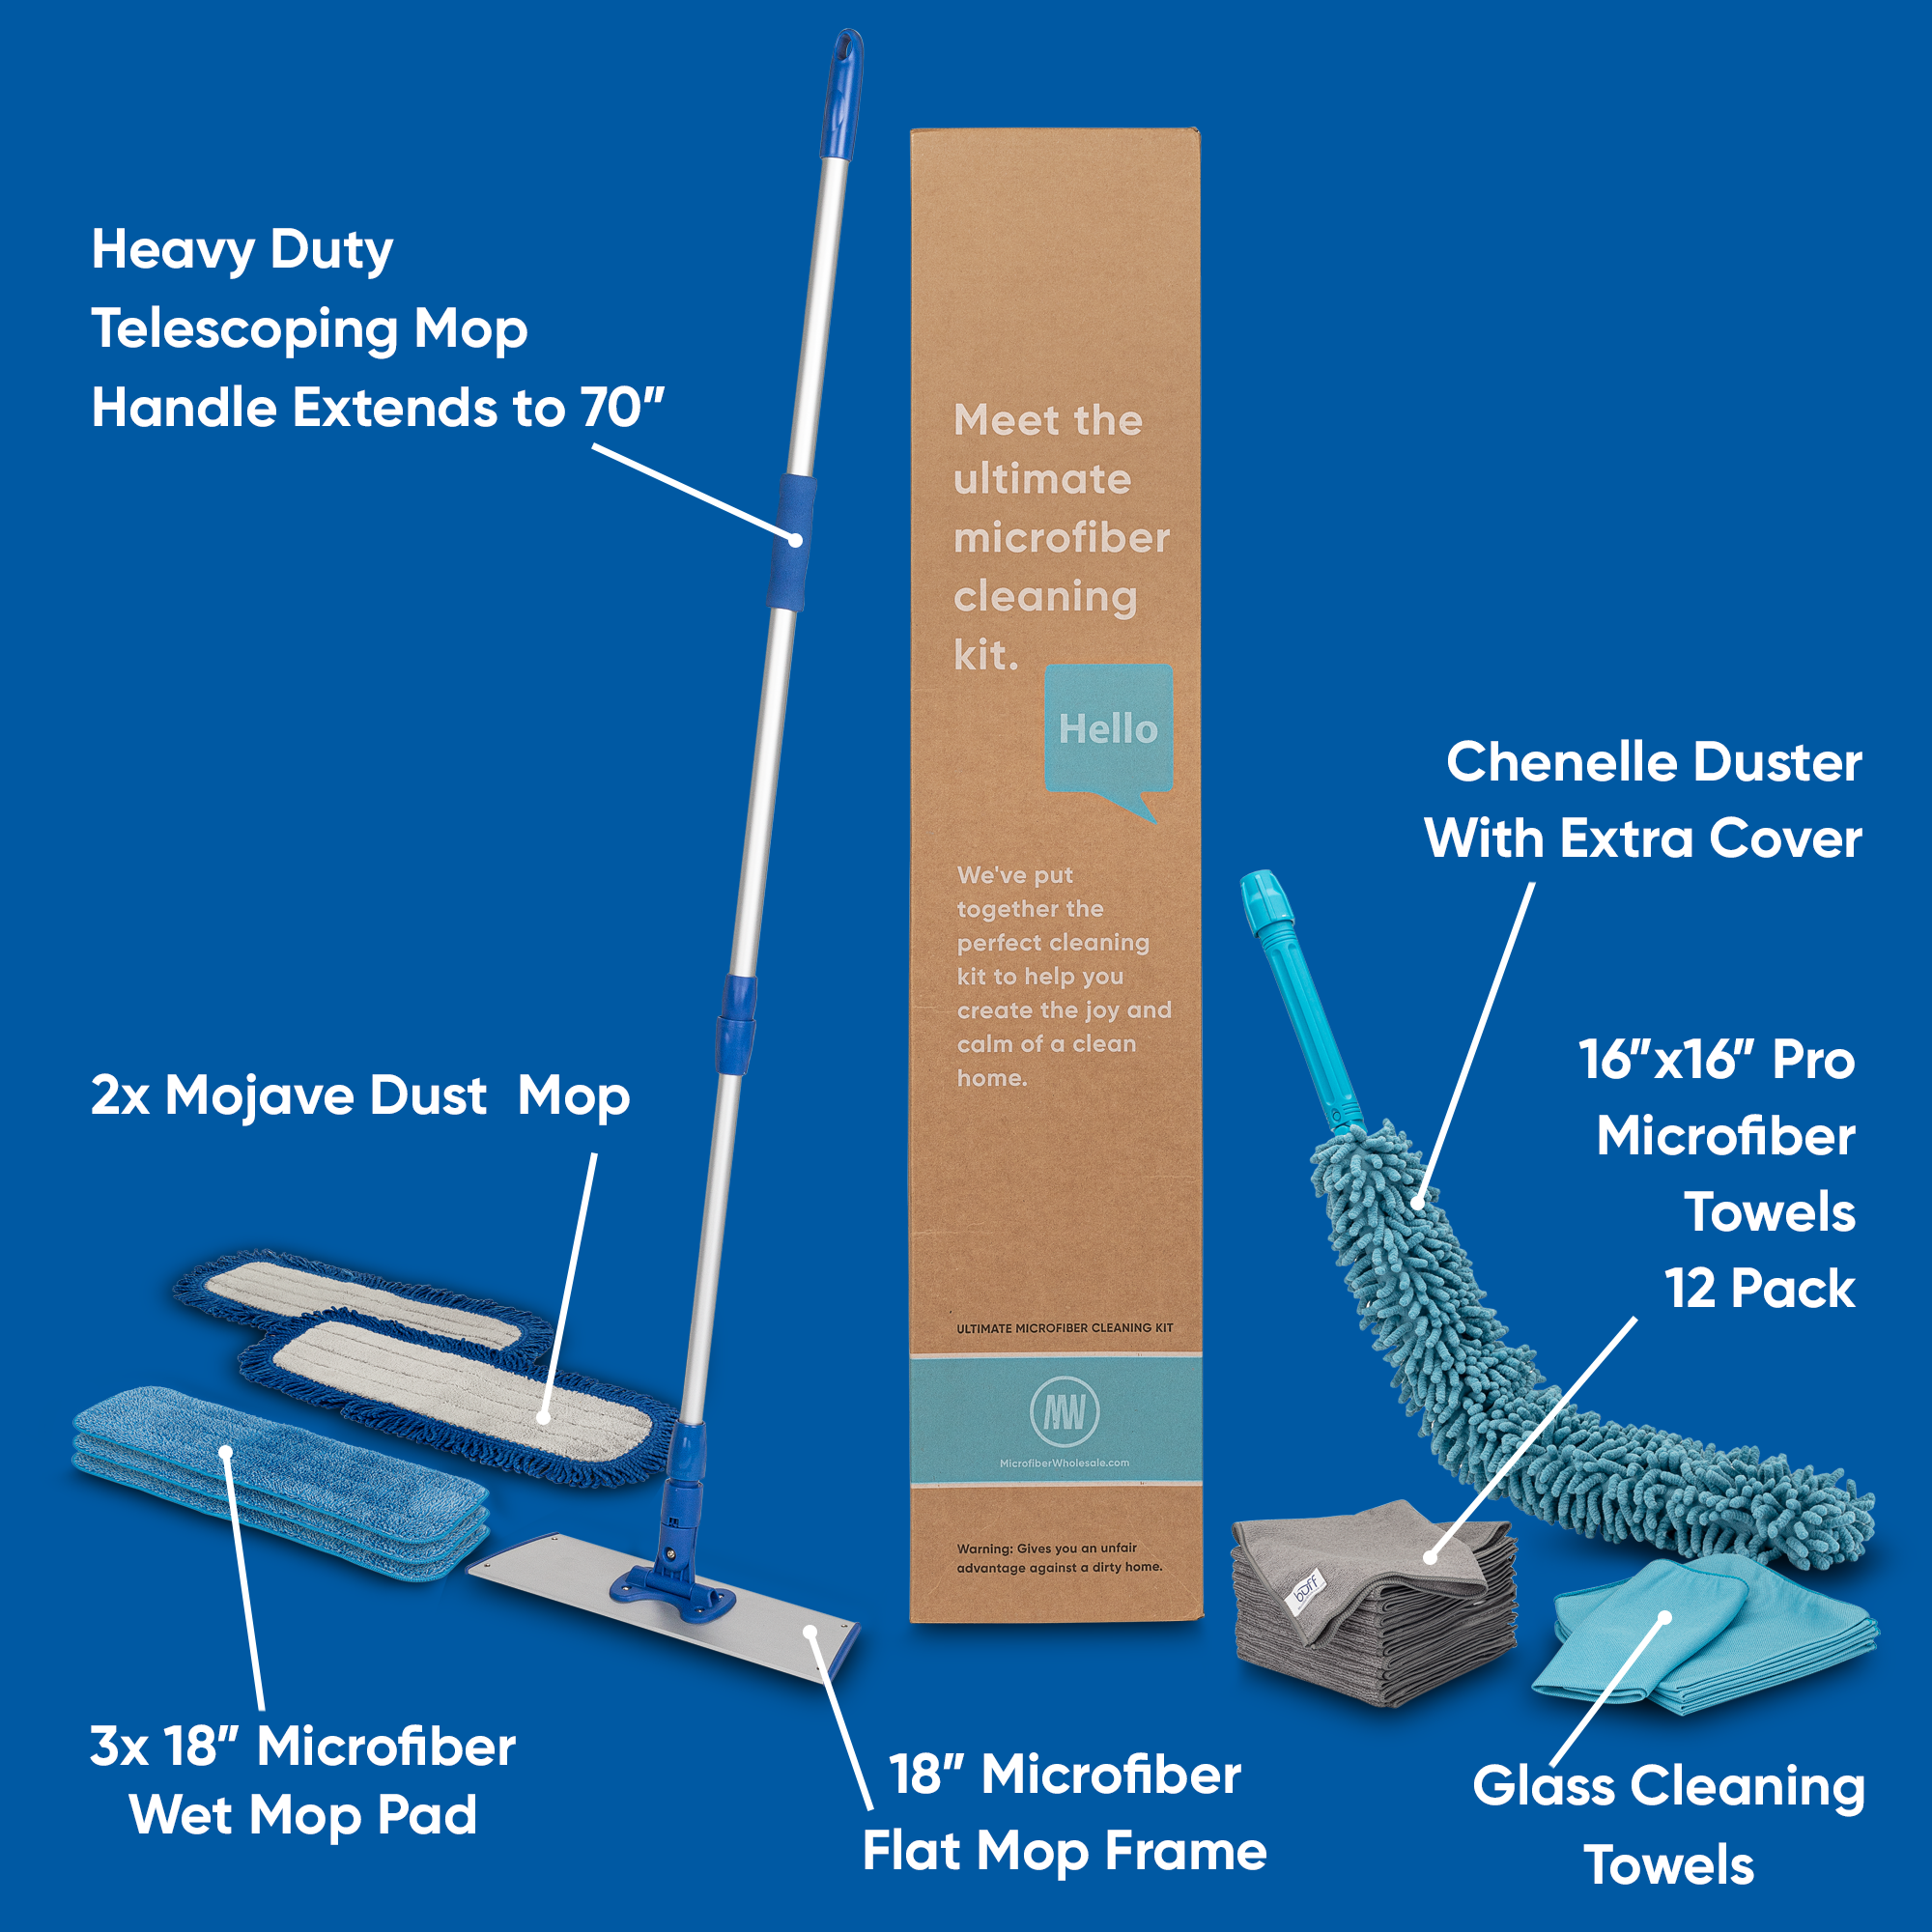 Ultimate Microfiber Cleaning Kit